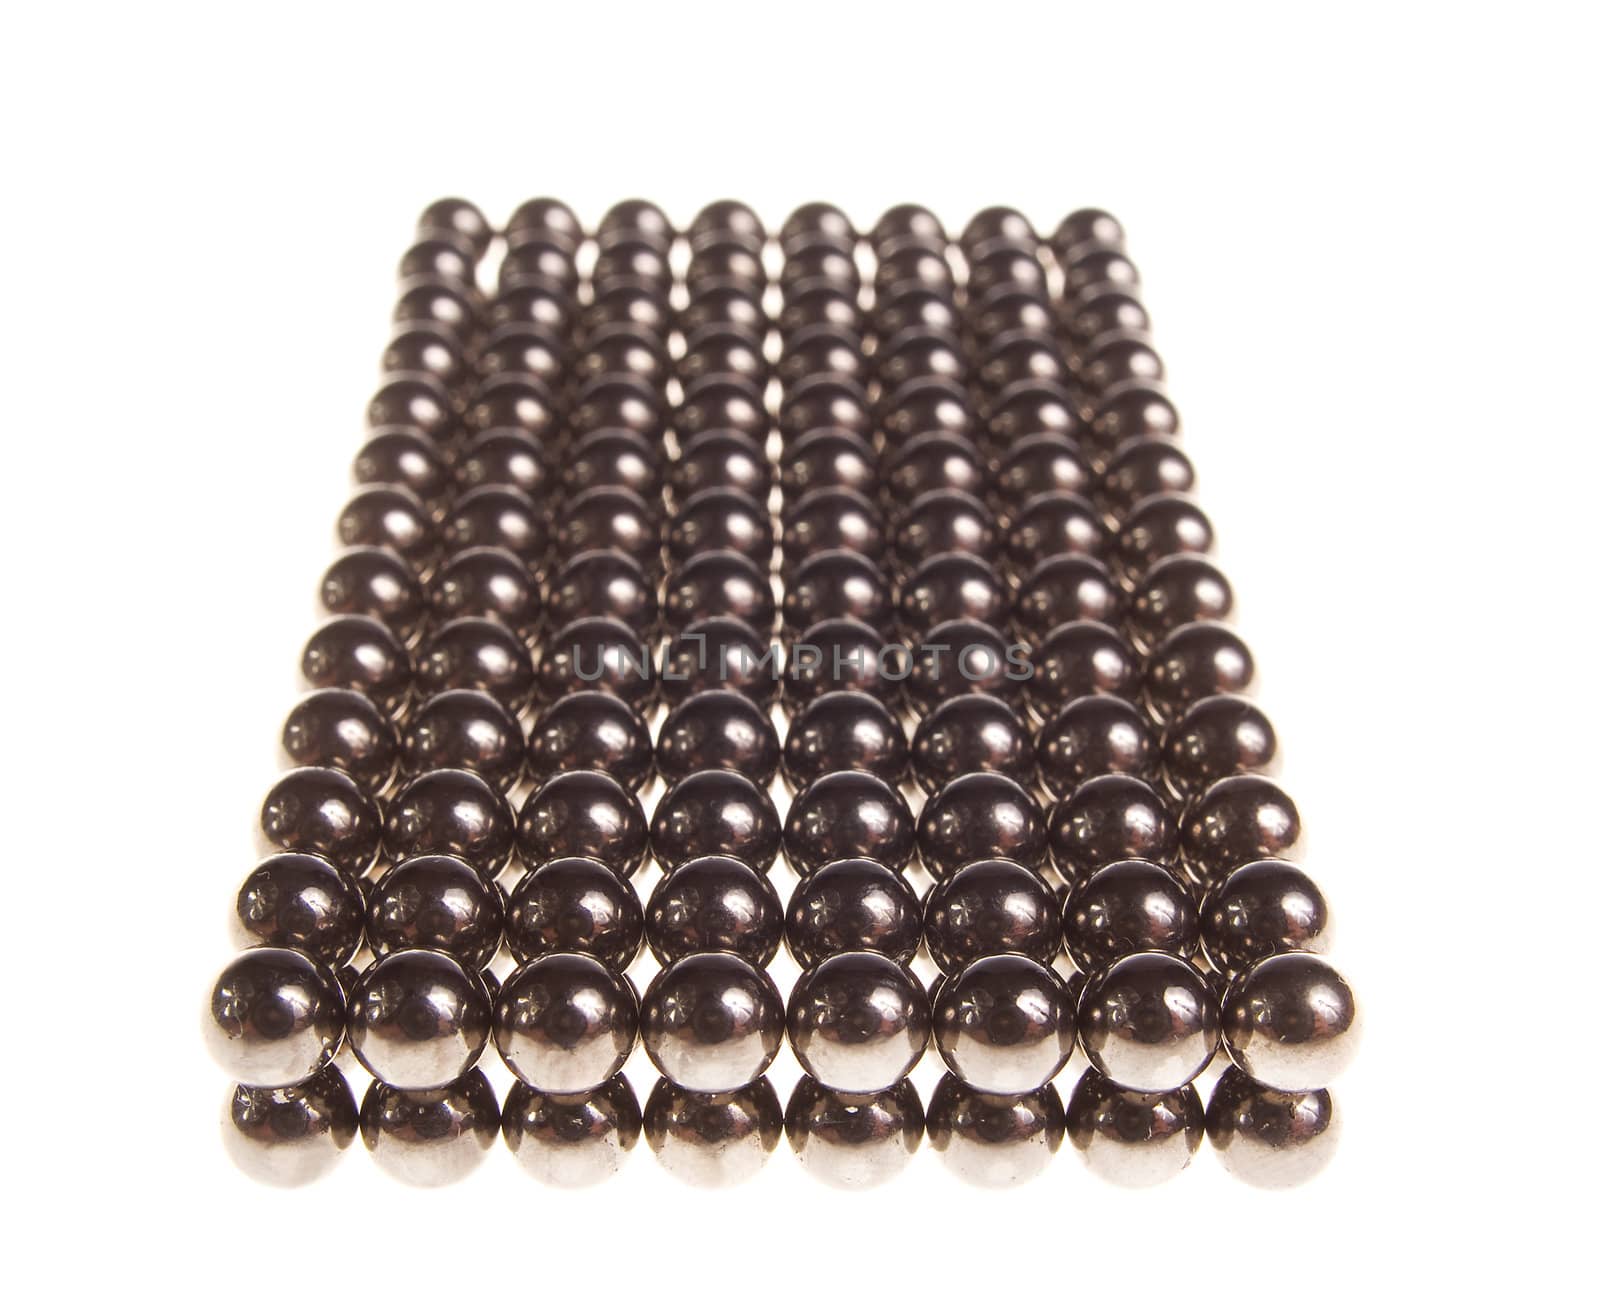 Rectangle of shiny metallic balls by BIG_TAU